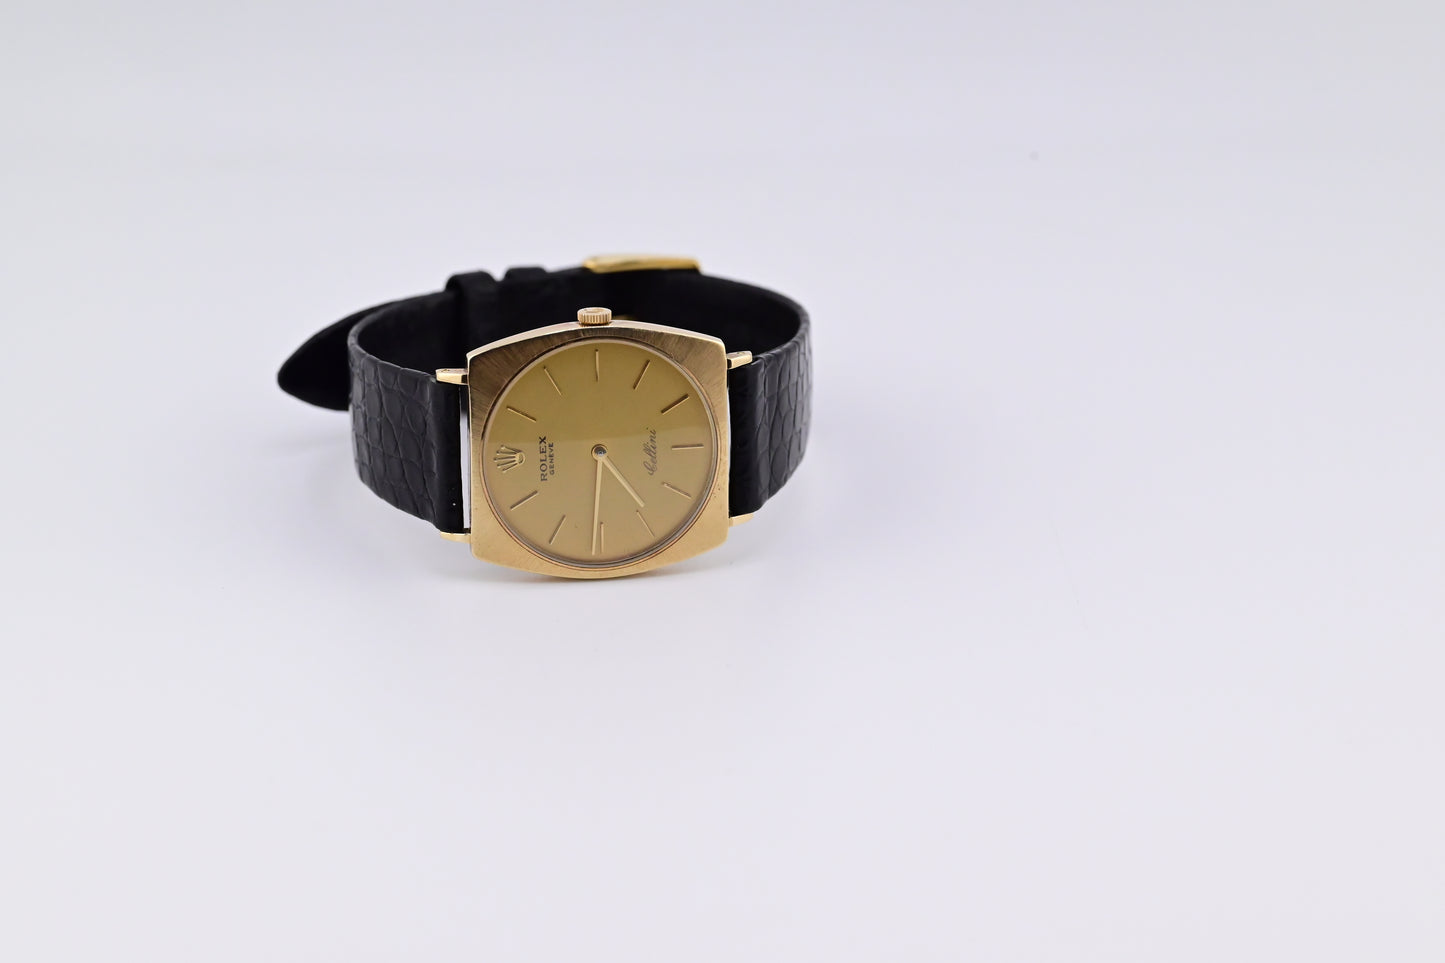 Rolex Cellini Watch 18K Yellow Gold